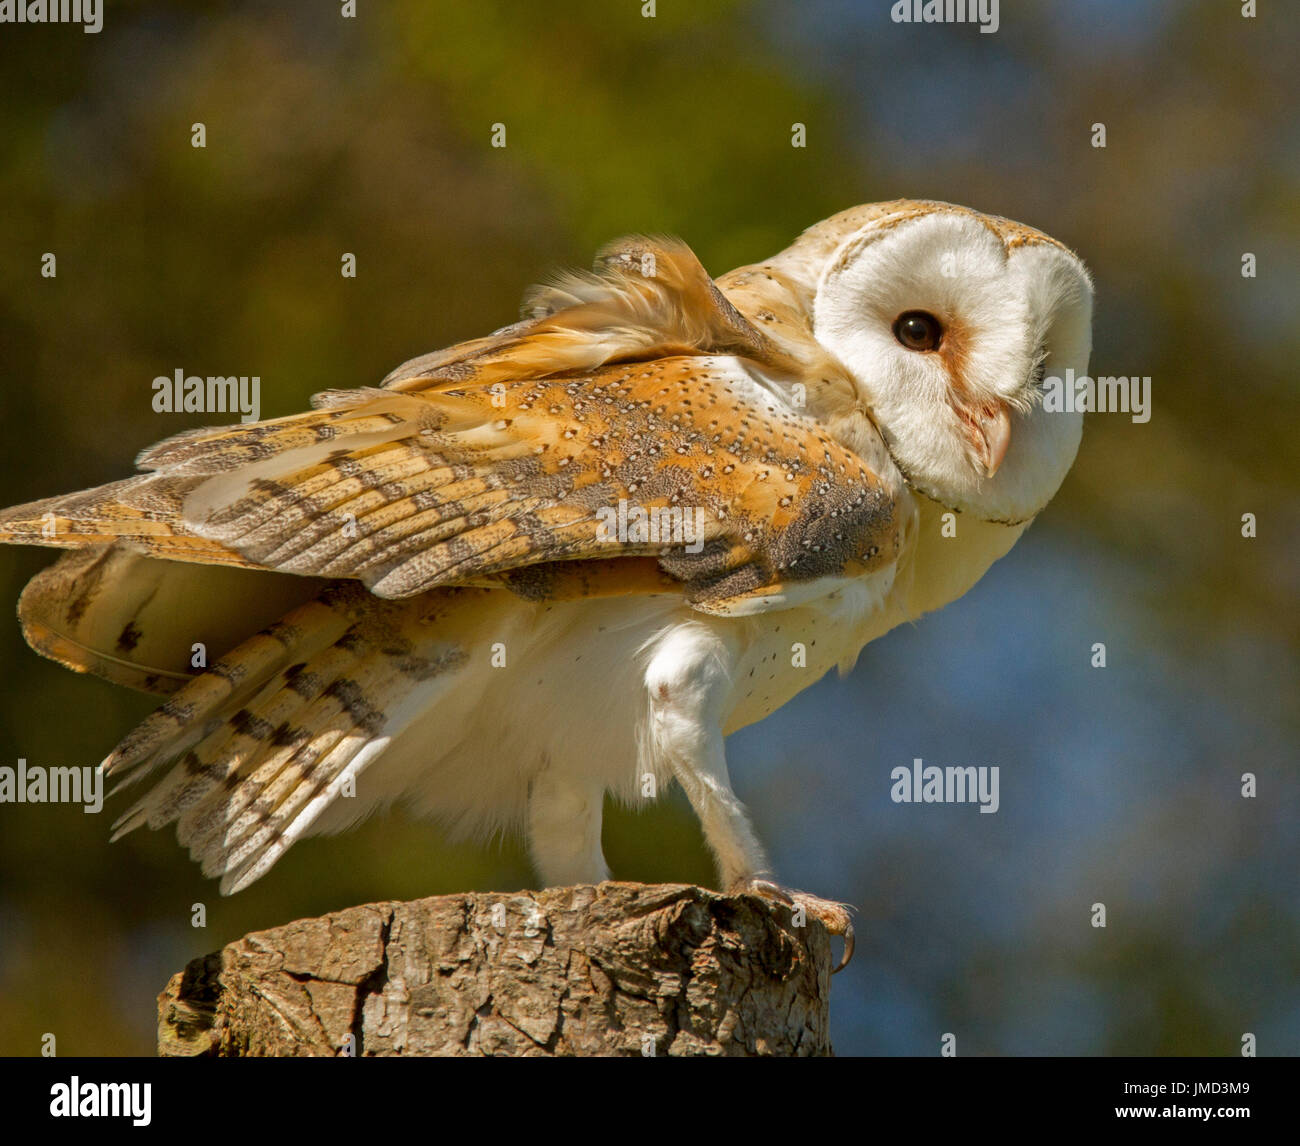 British barn owl, Tyto alba, perched on wooden stump against dark background Stock Photo